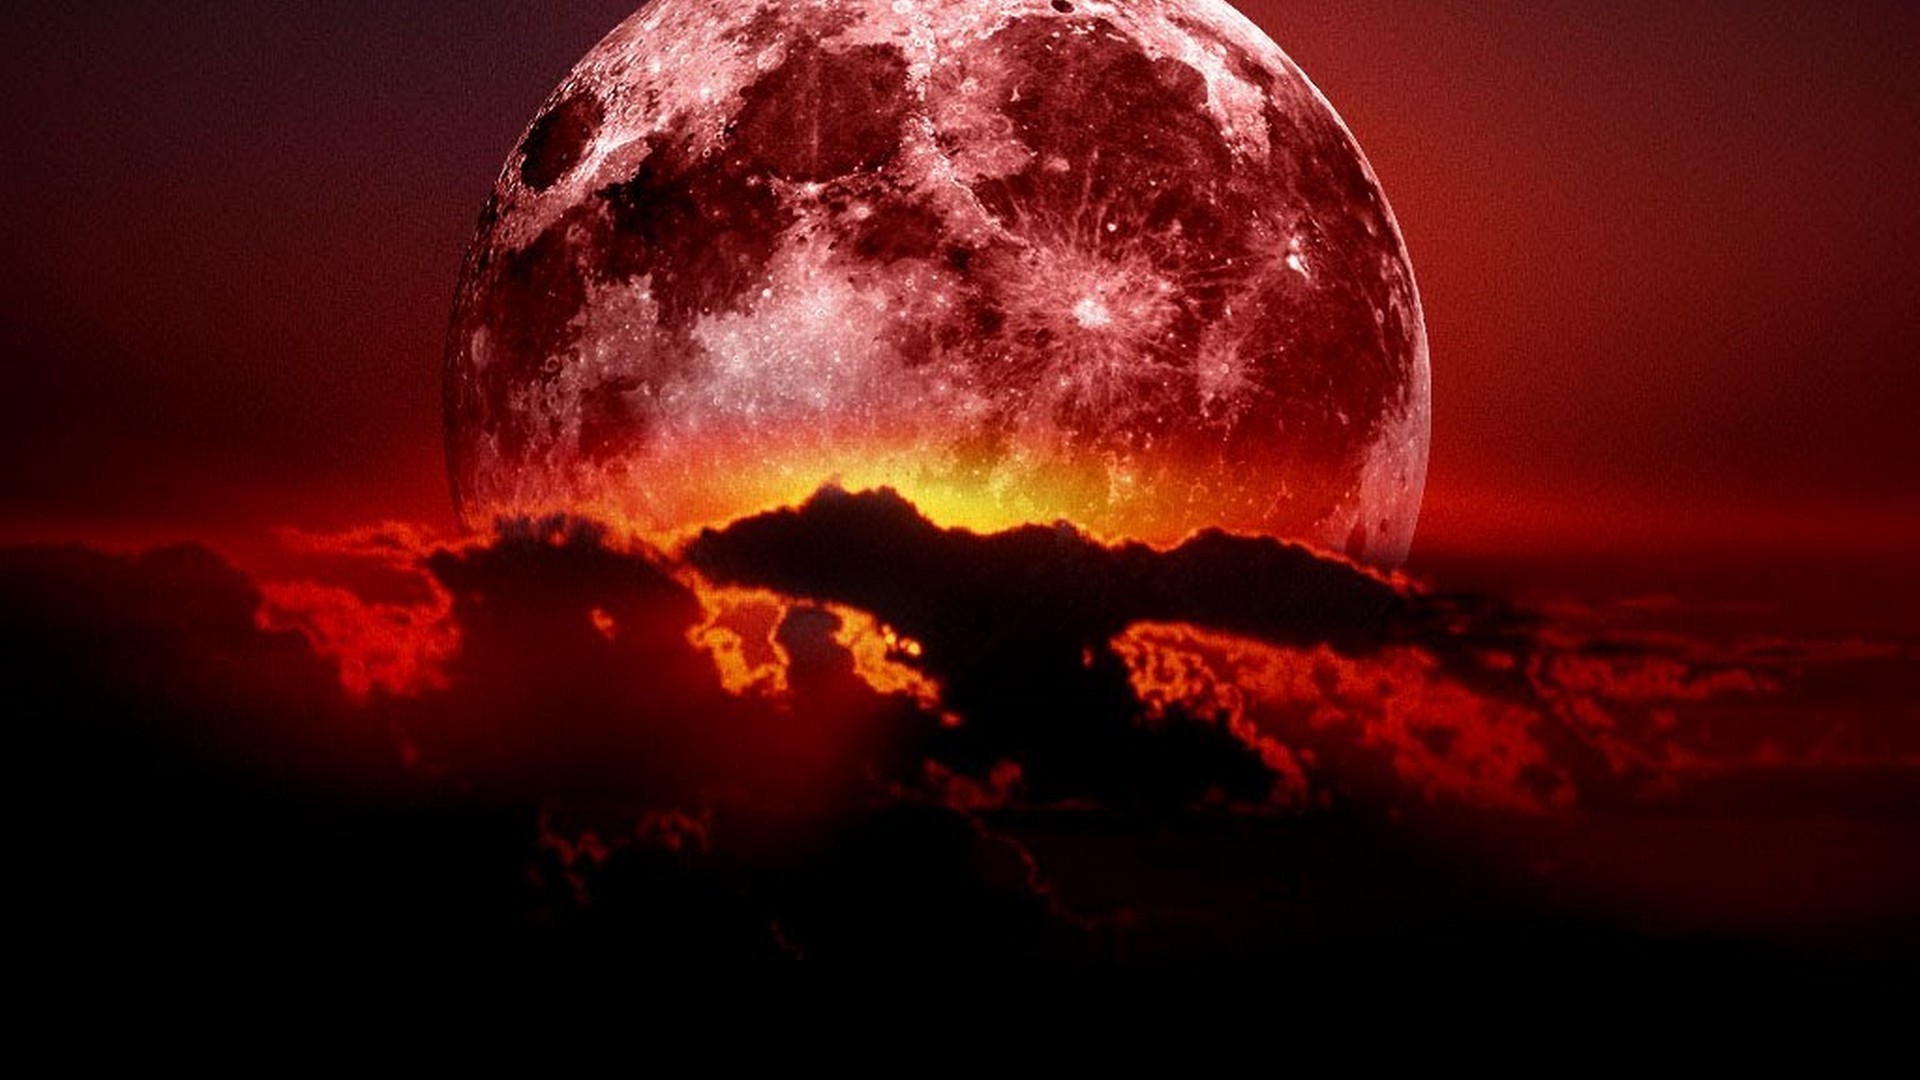 Wallpaper Lunar Eclipse Cute